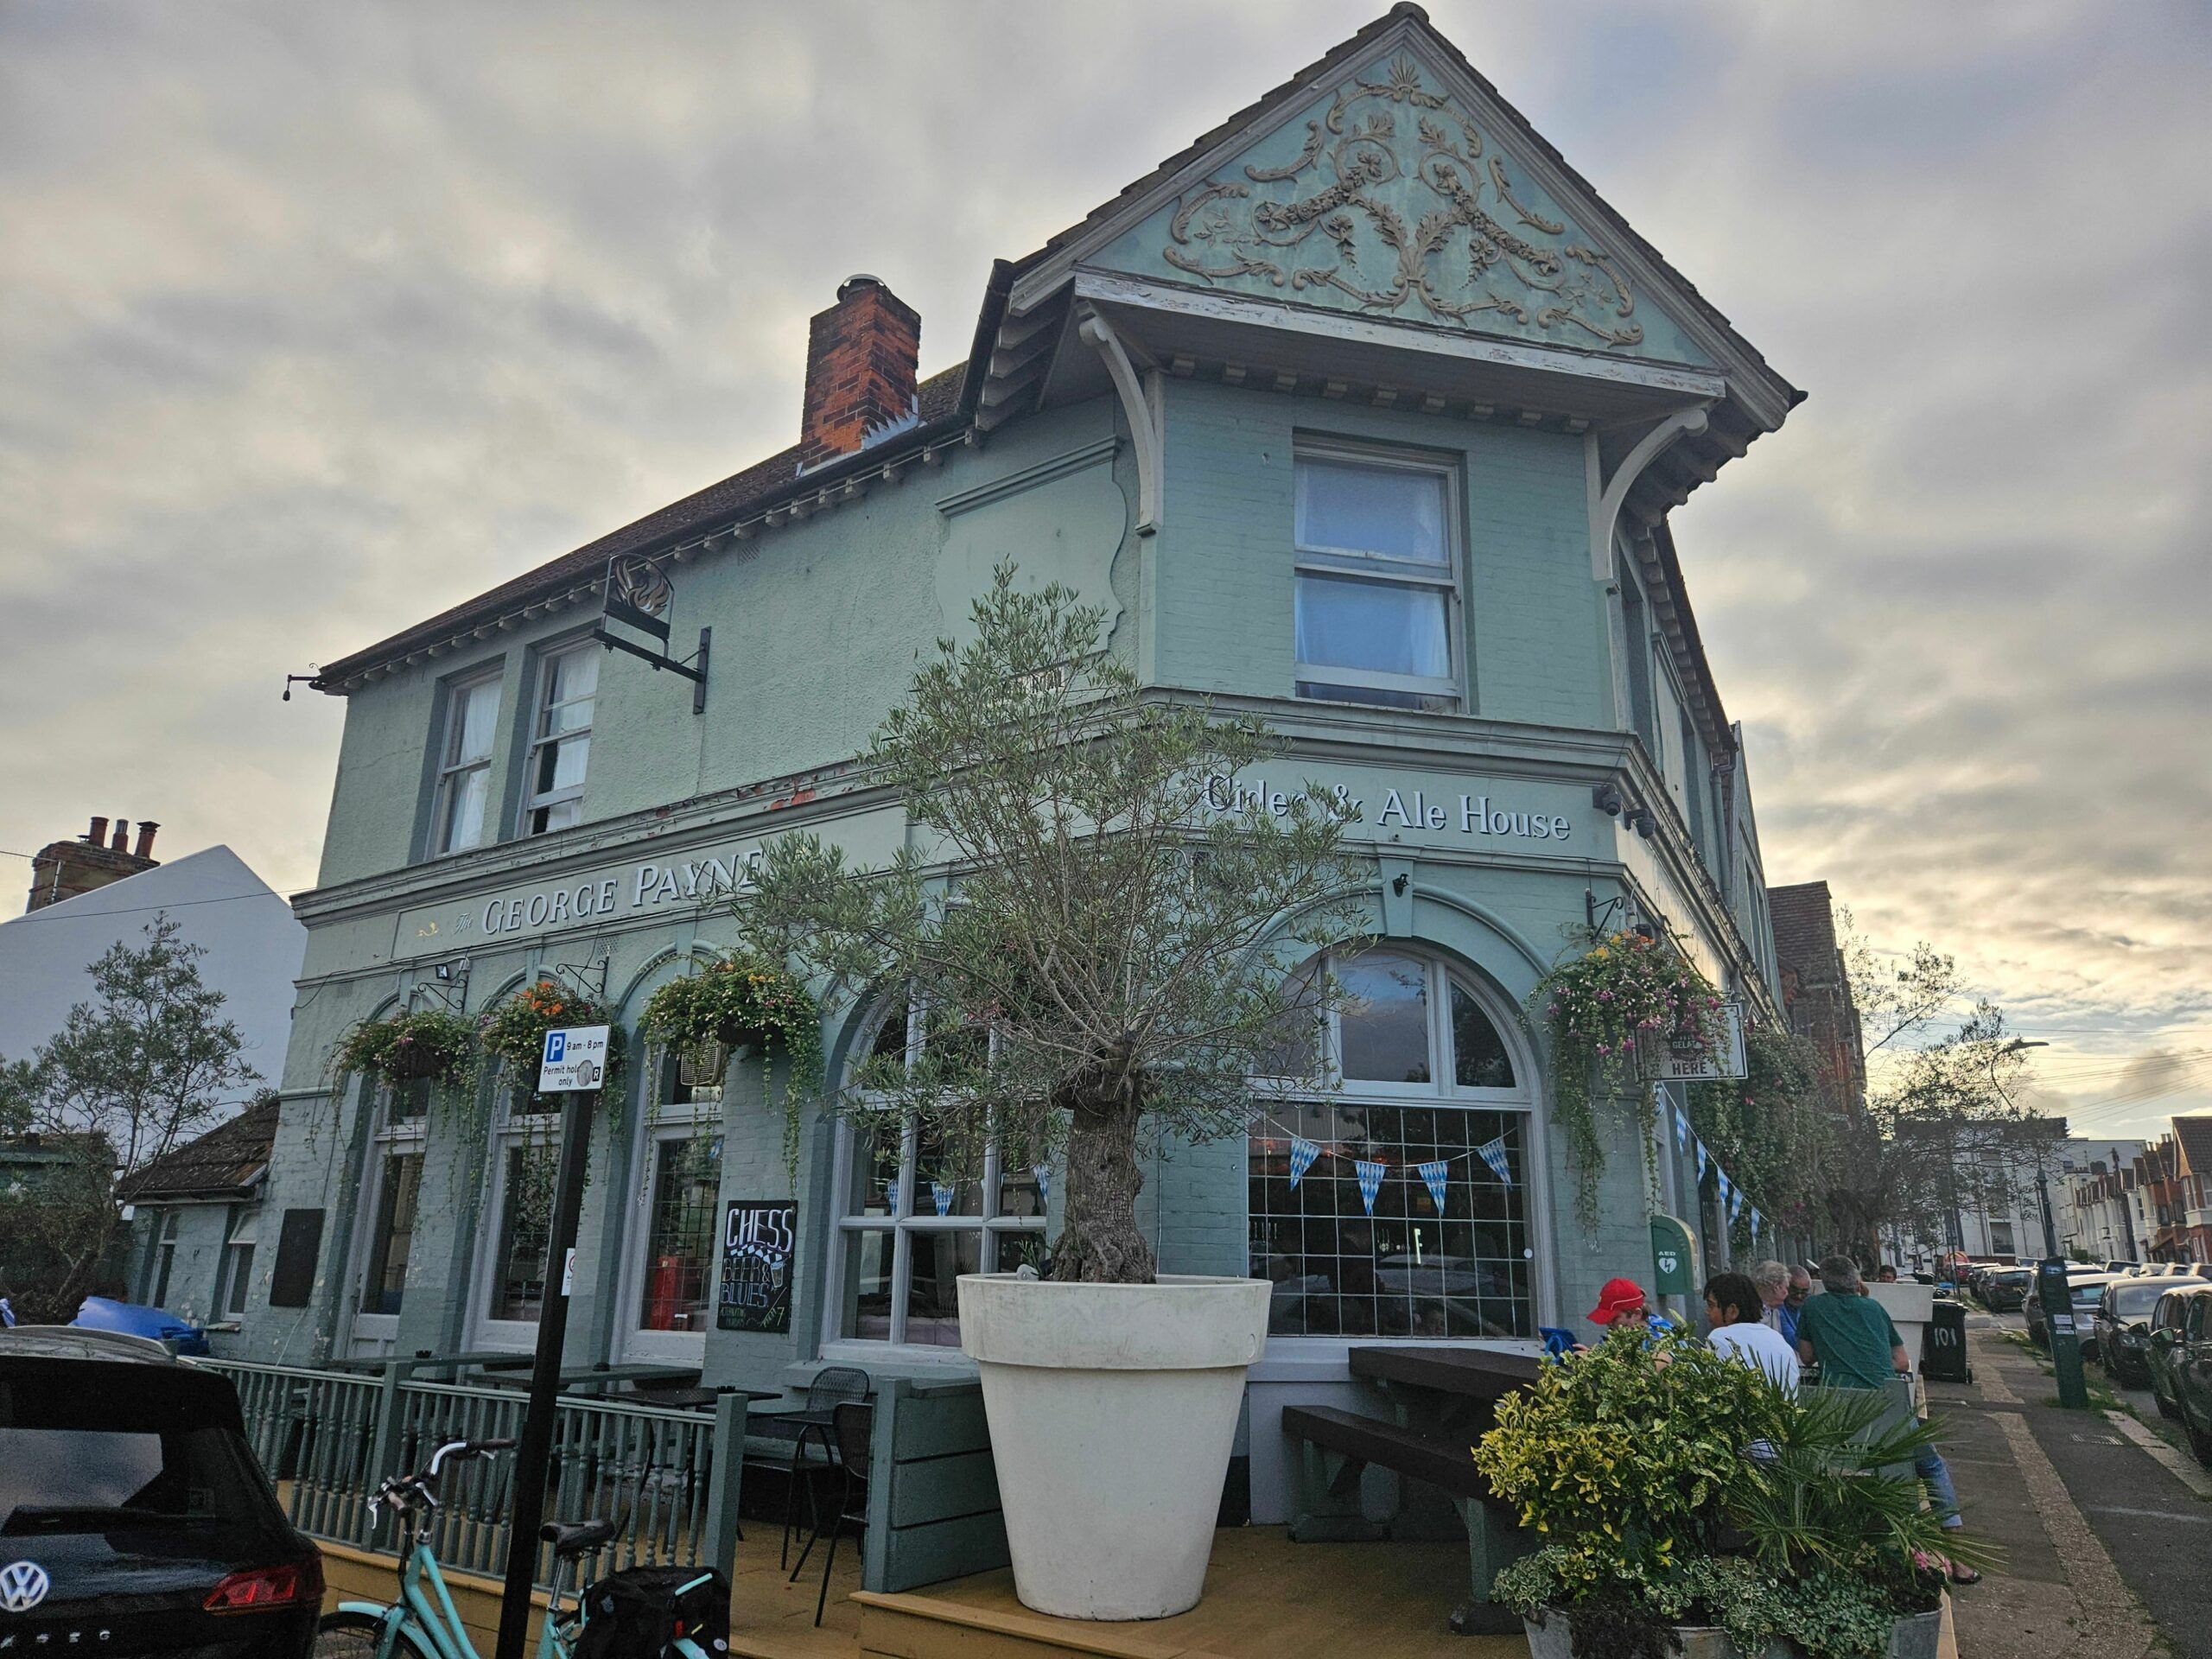 exterior shot of the George Payne pub